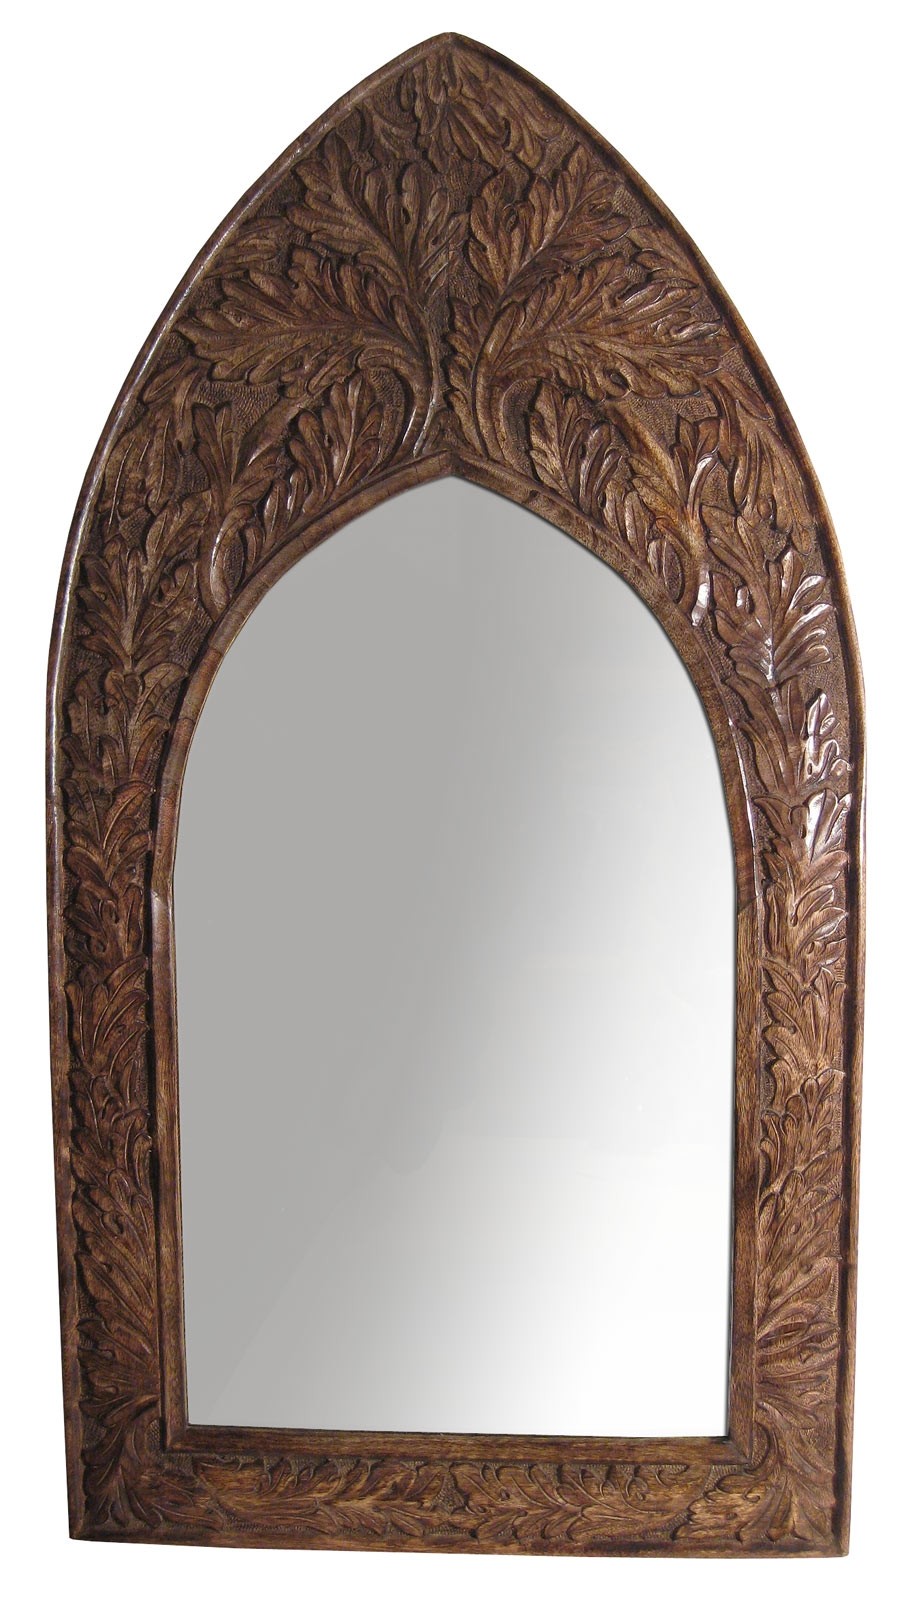 Mango Wood Gothic Mirror Leaf Design Large